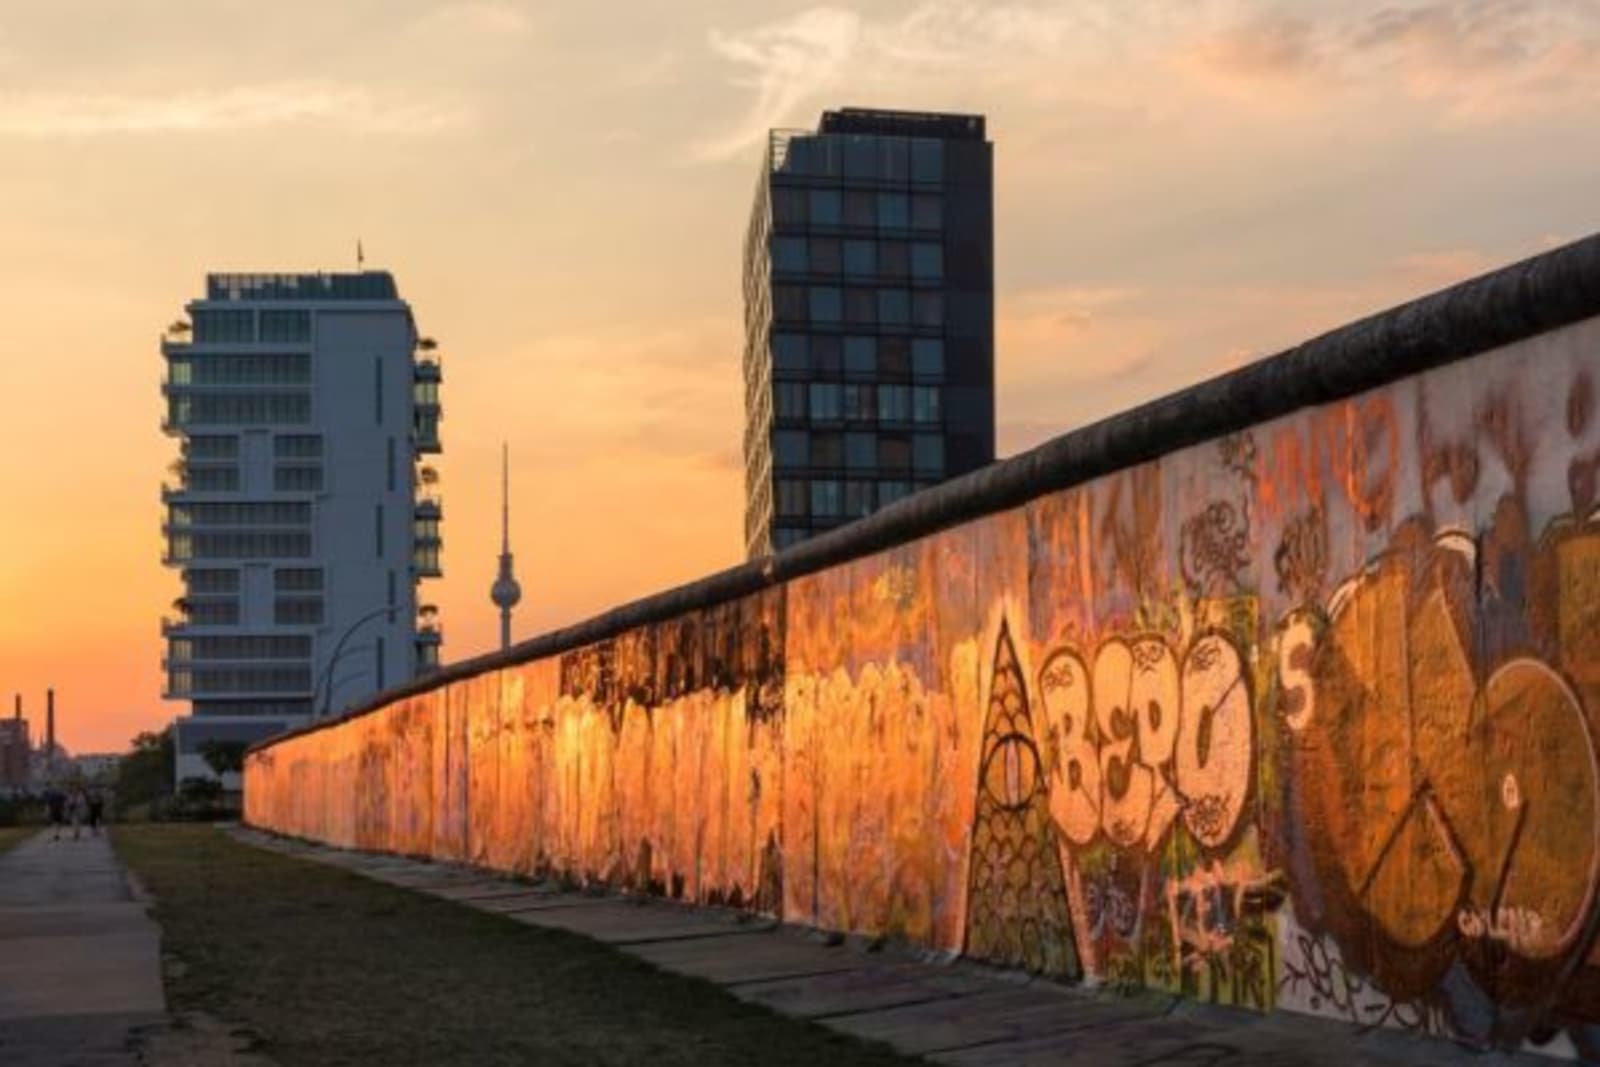 Sunset reflecting off a graffiti art city wall in Berlin